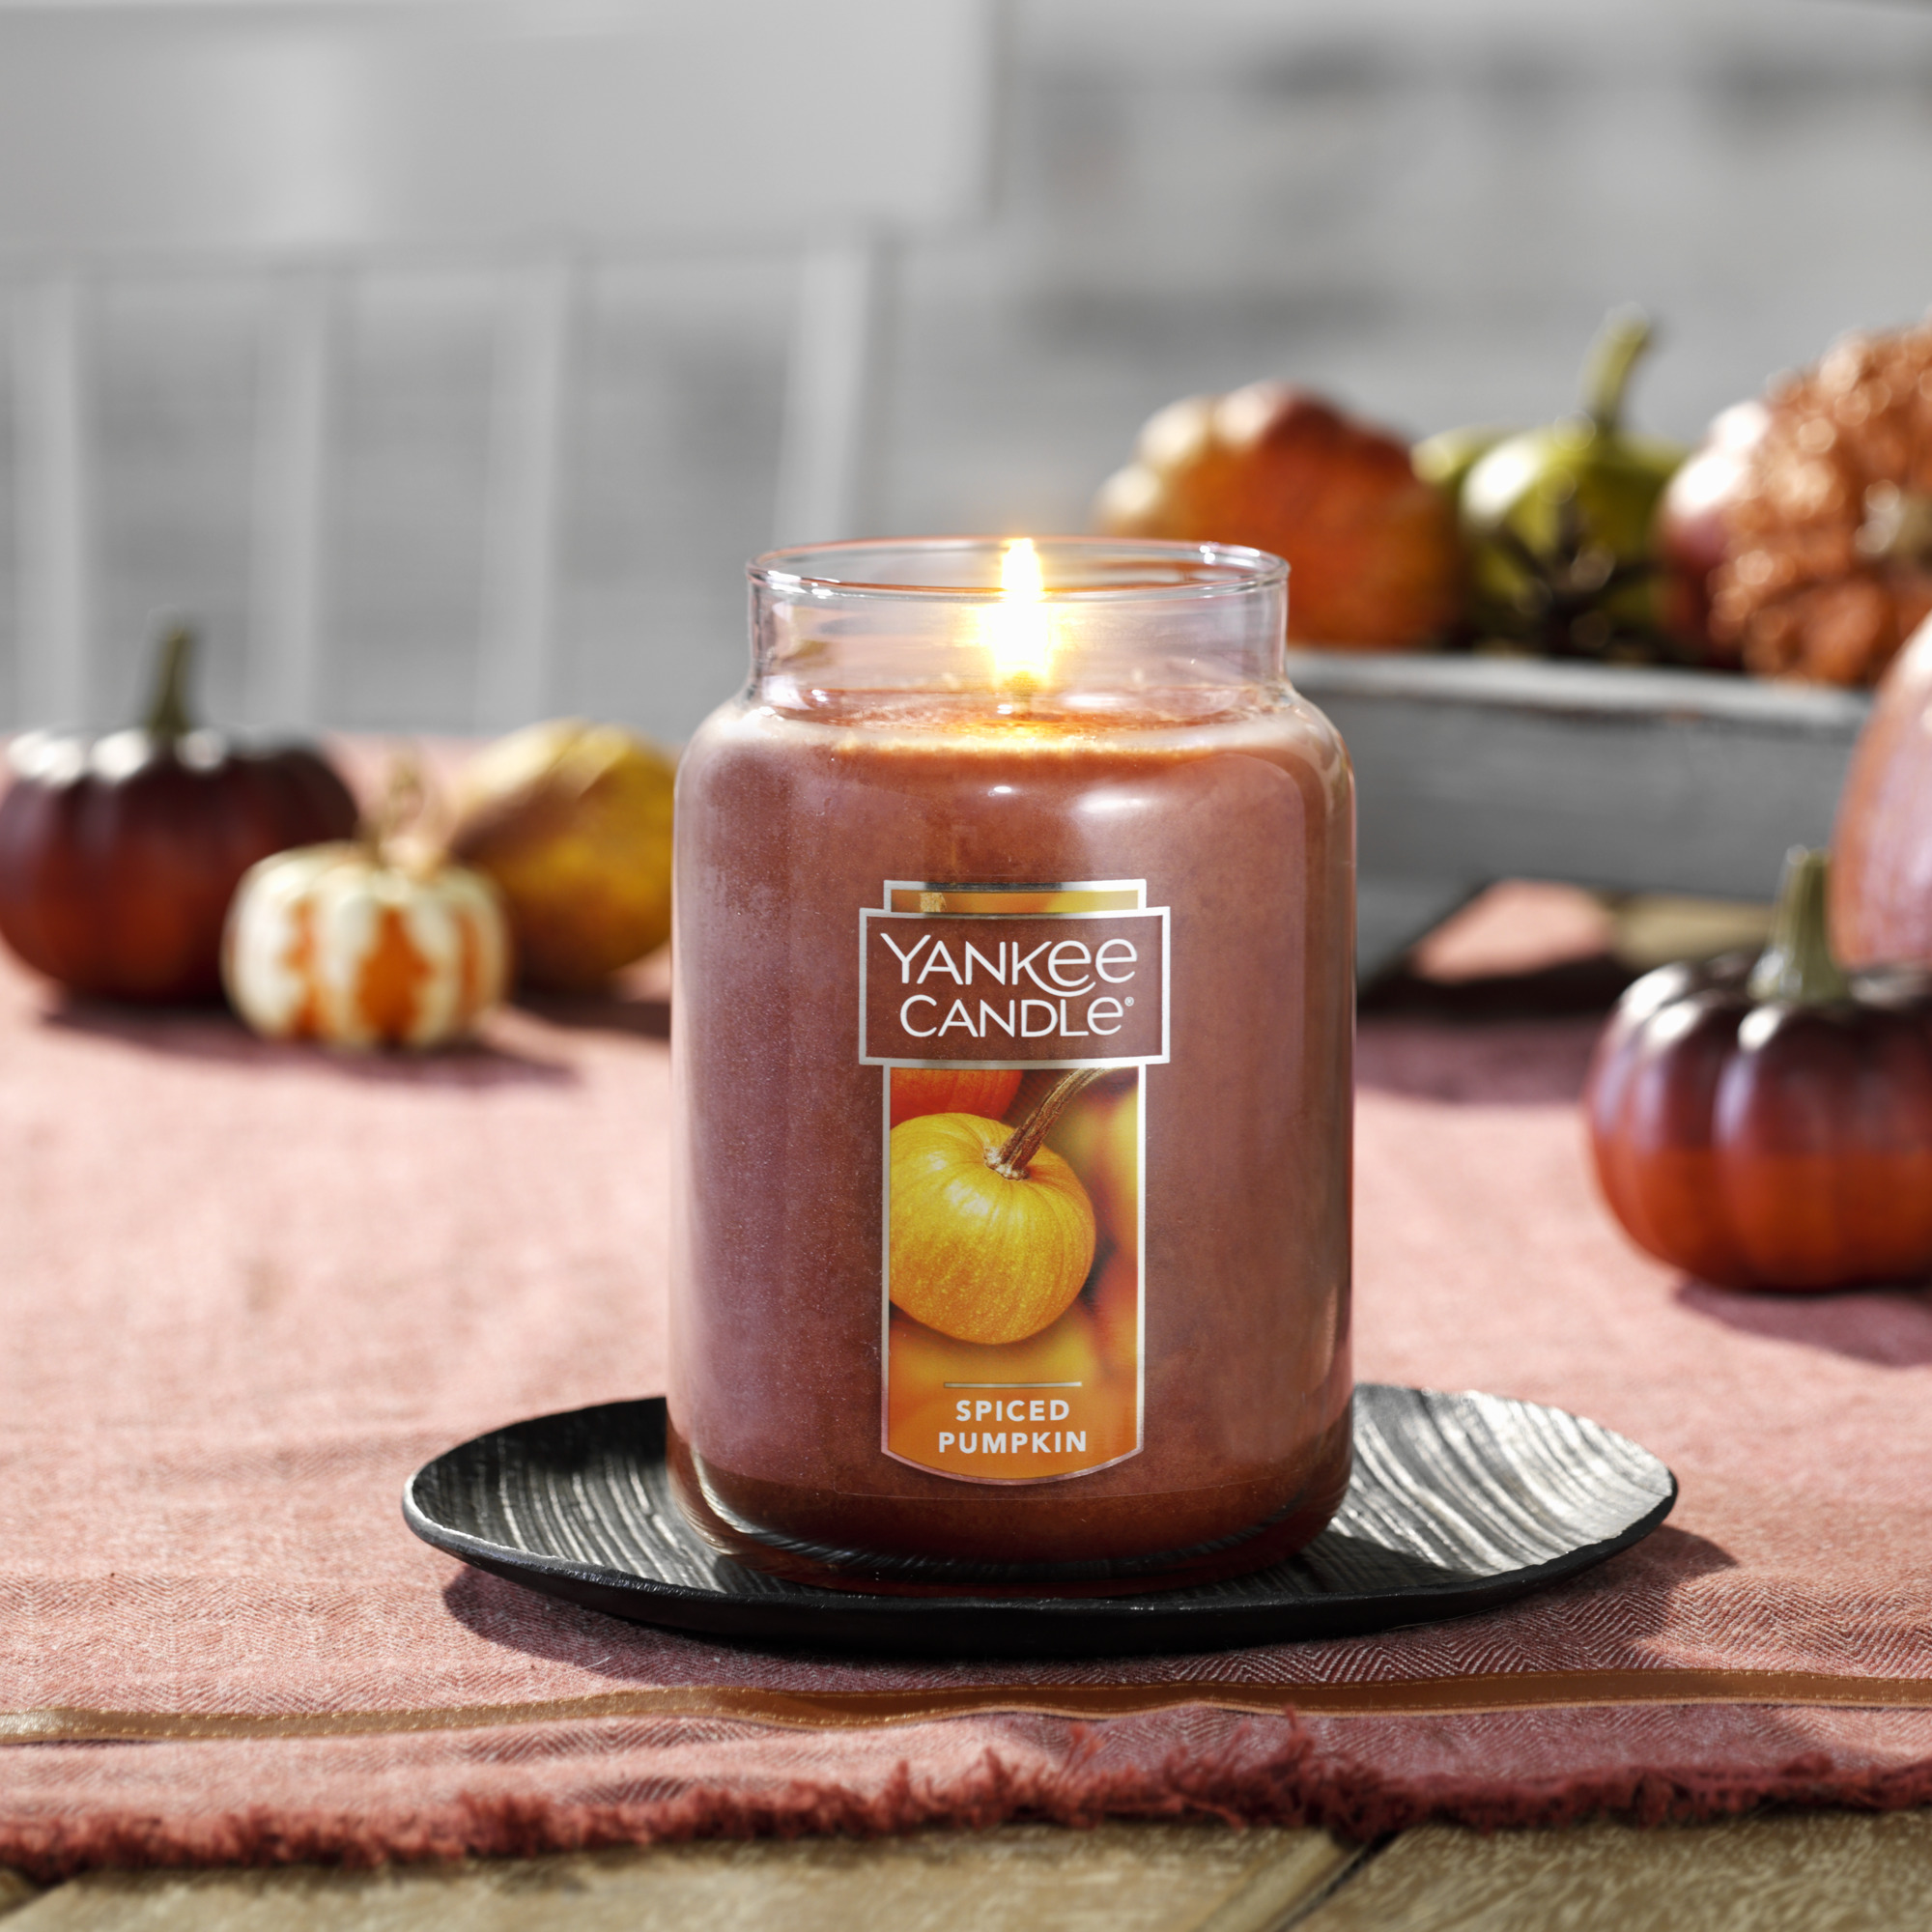 Yankee Candle Spiced Pumpkin - Original Large Jar candle - image 3 of 6